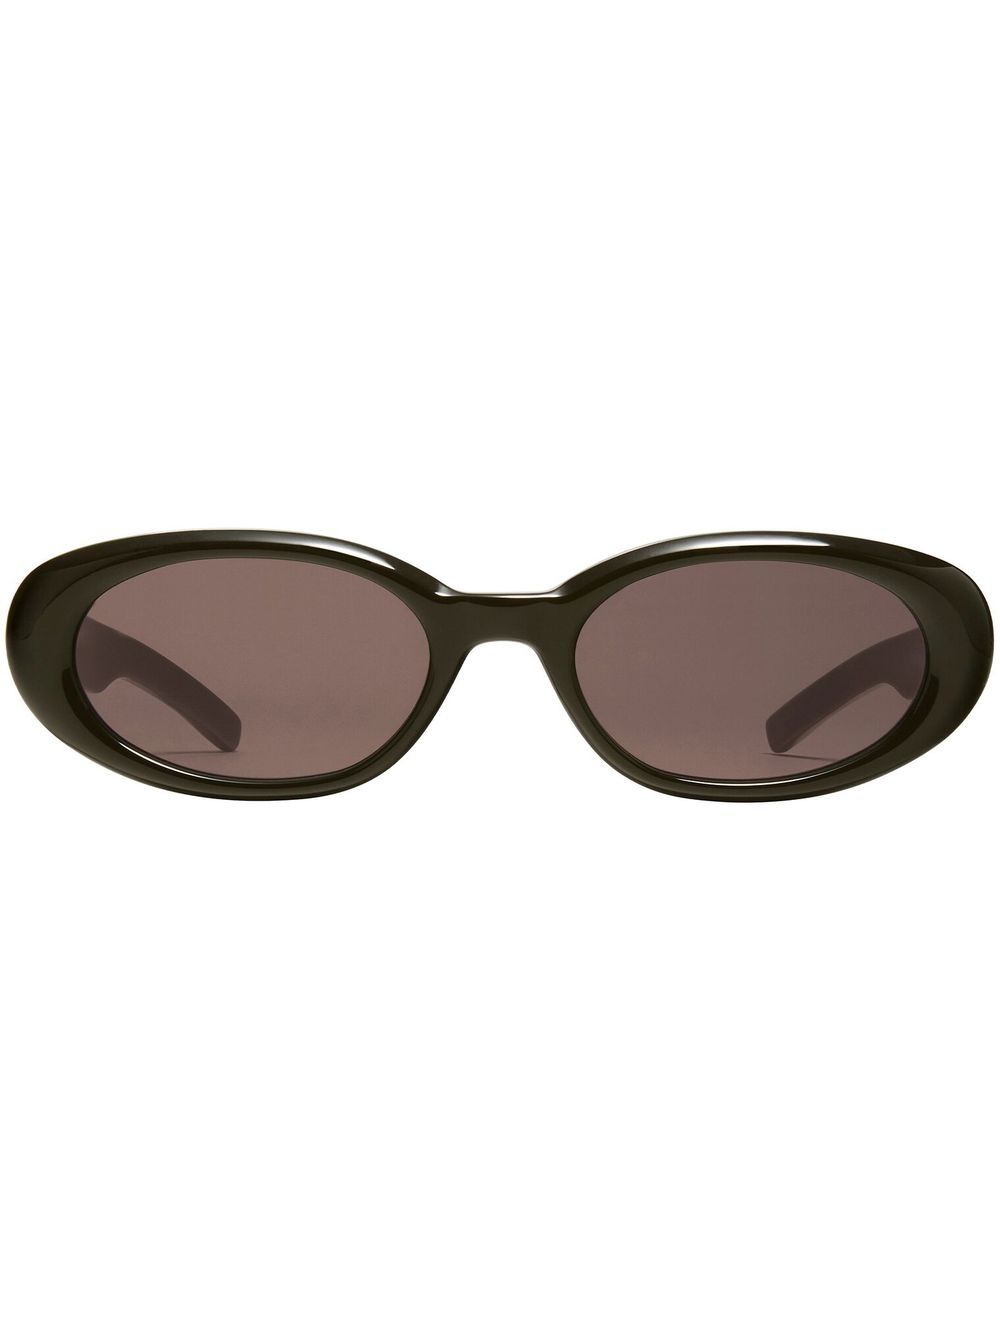 Image 1 of Gentle Monster oval-frame sunglasses